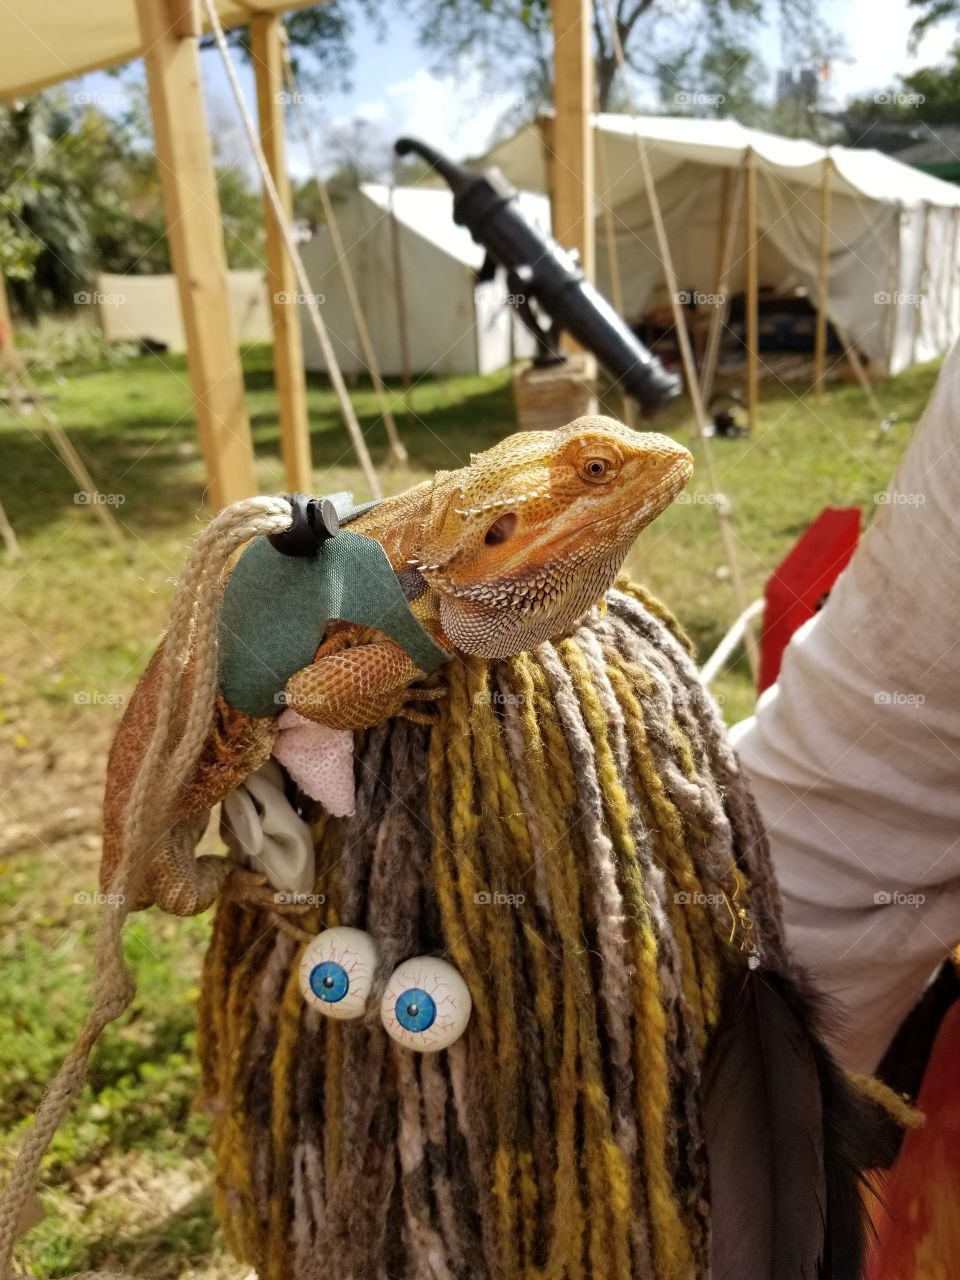 Bearded Dragon at Renaissance Festival